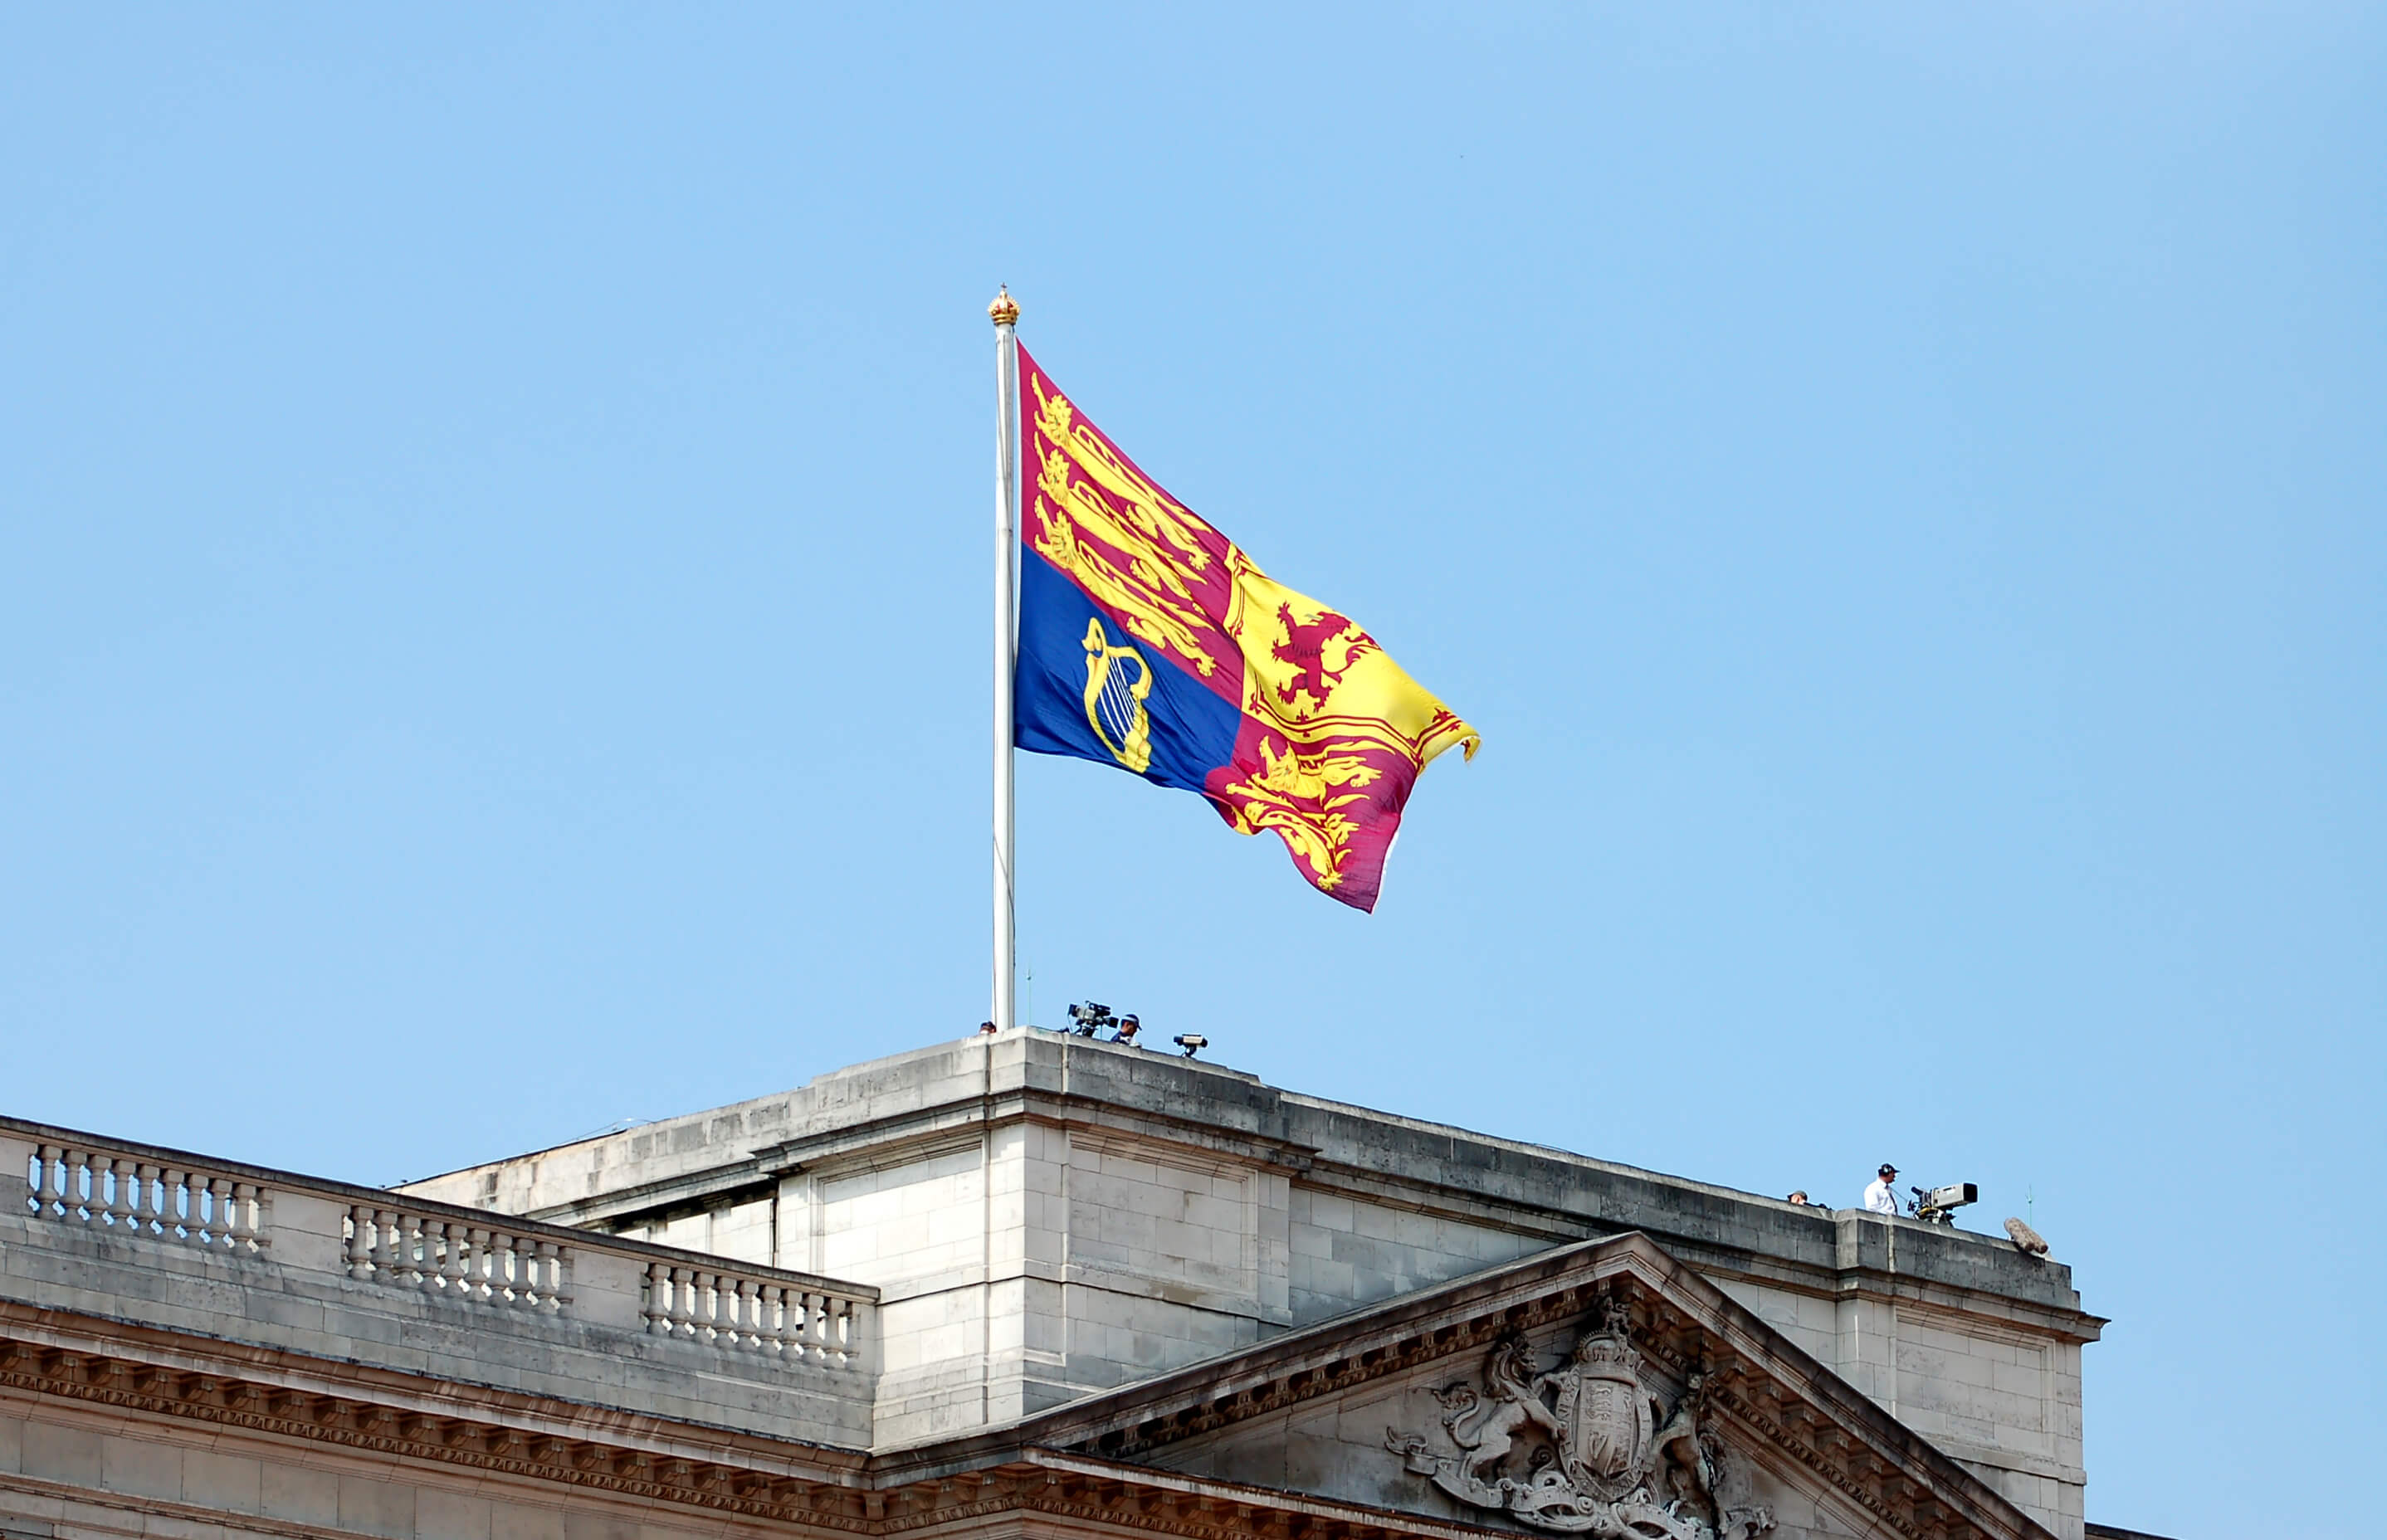 Royal Standard flag Buckingham Palace